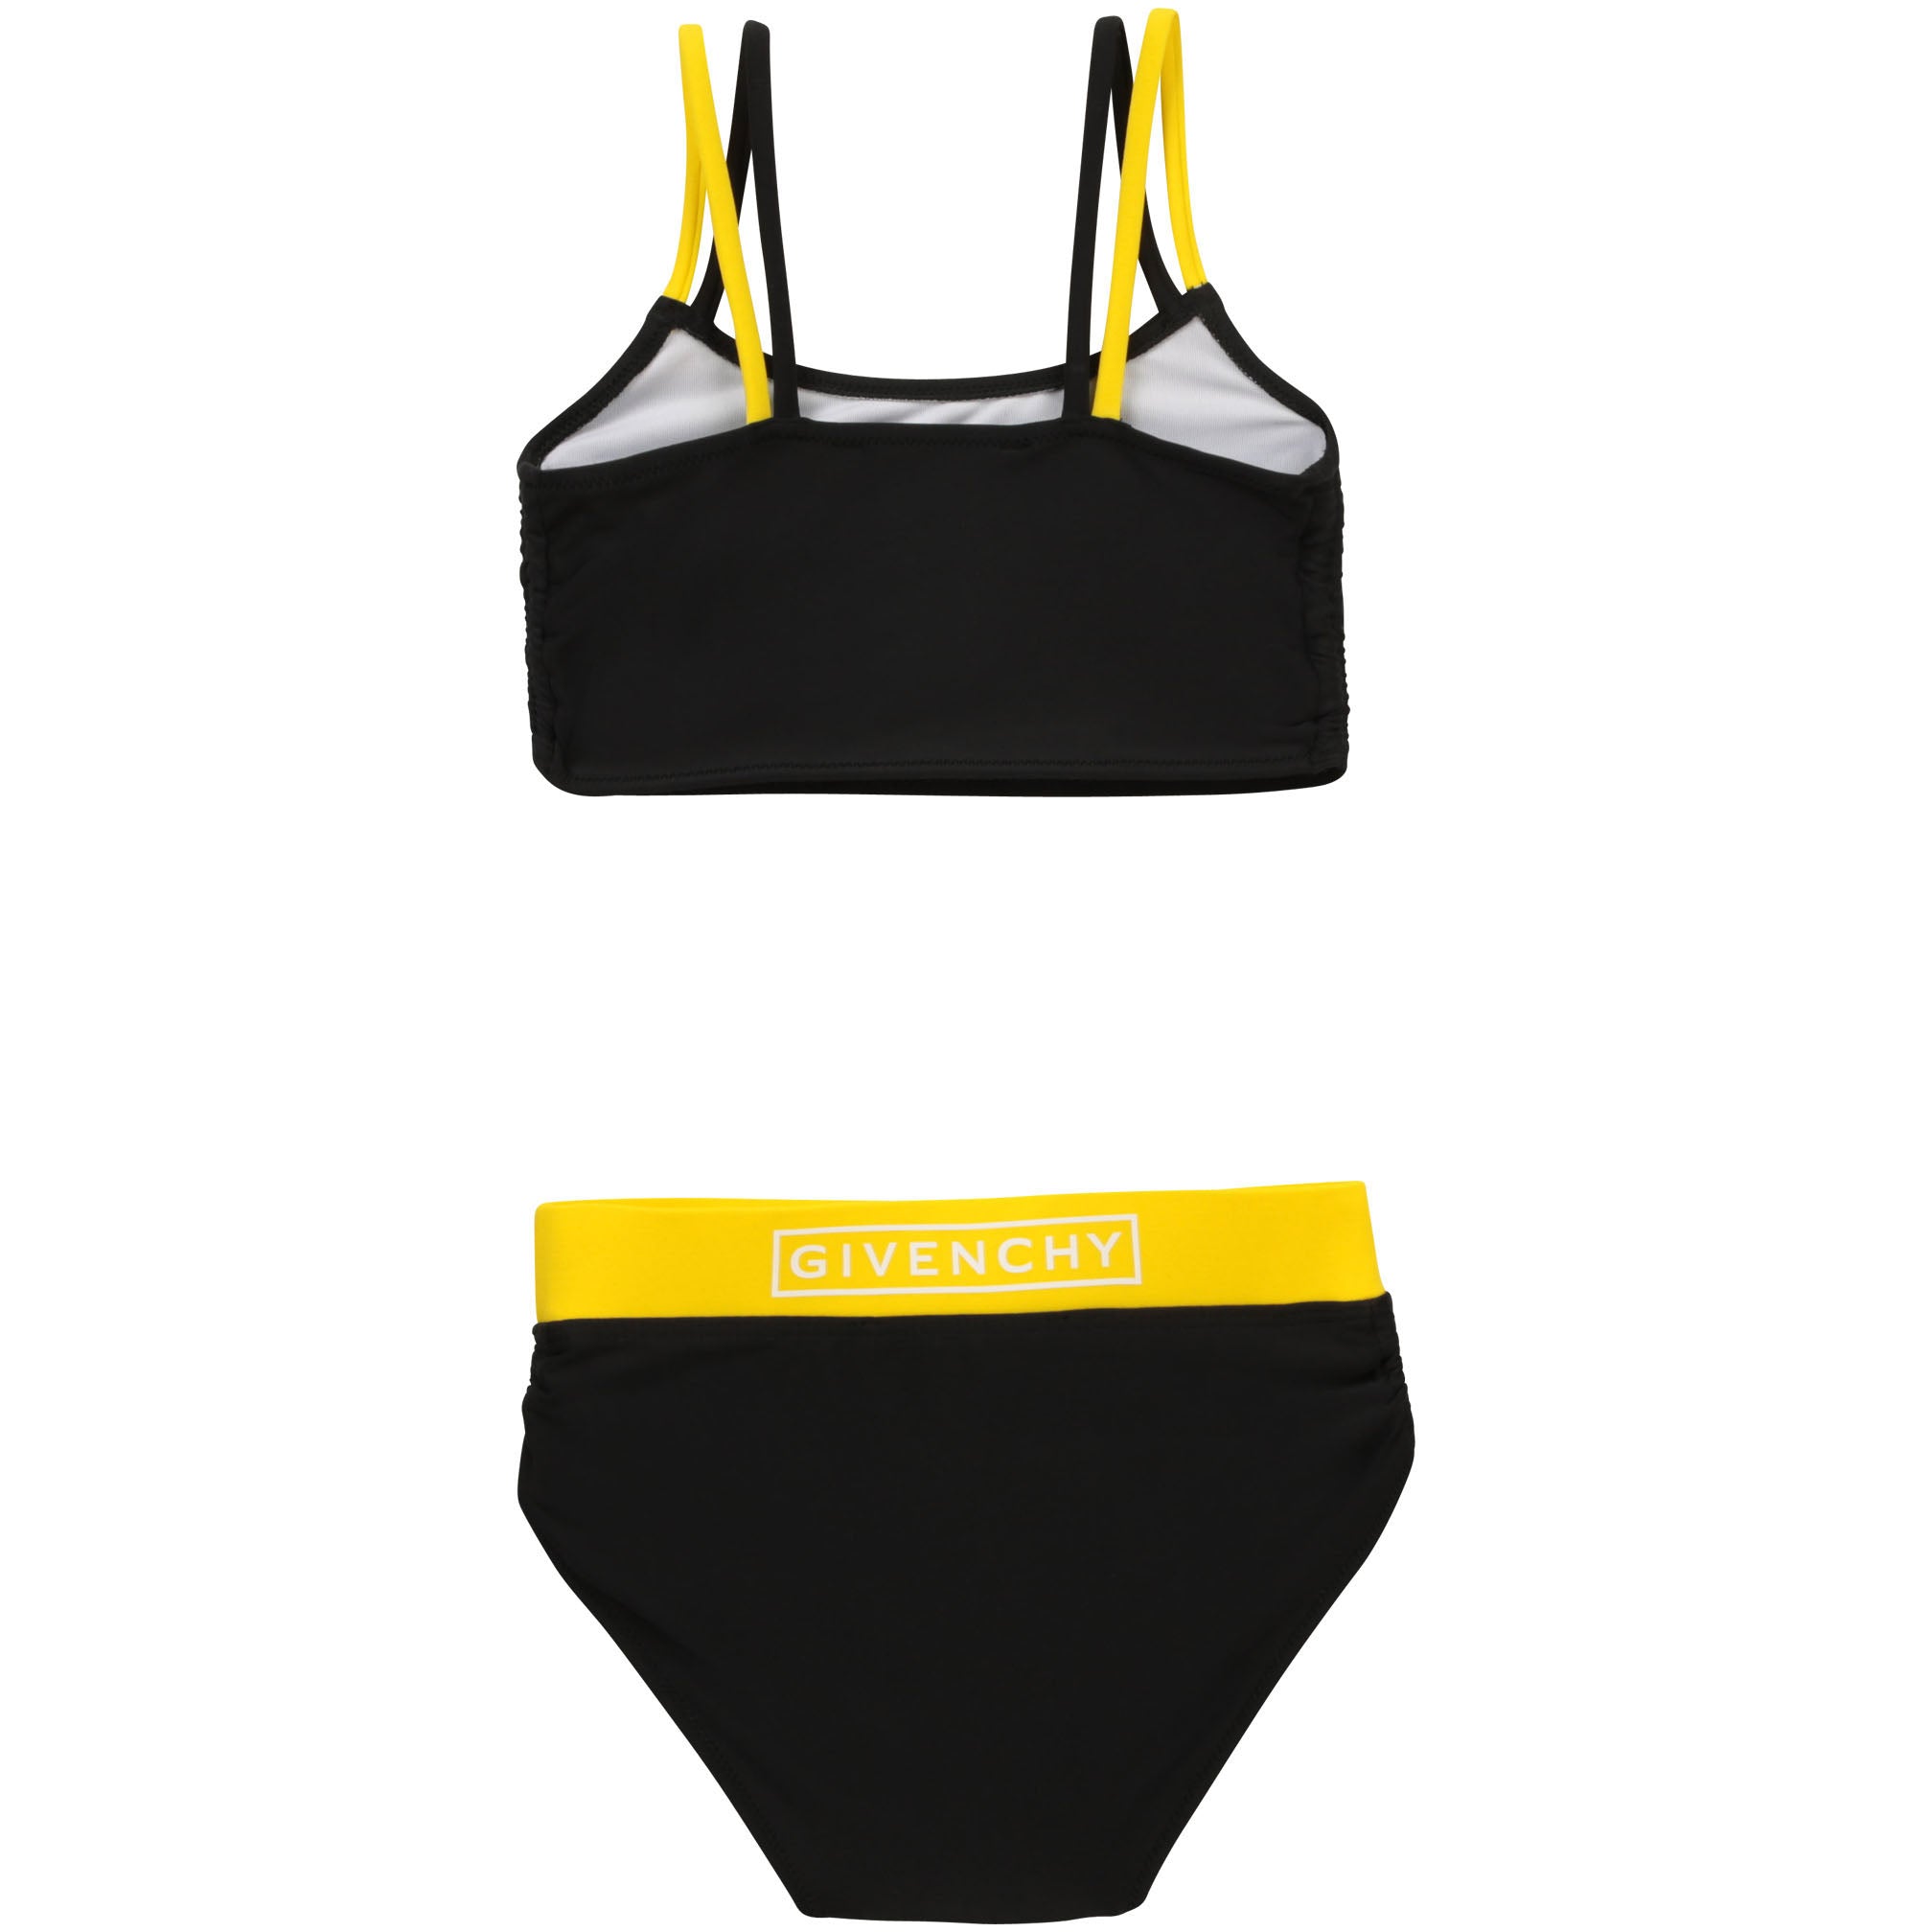 Givenchy Black and Yellow Bikini